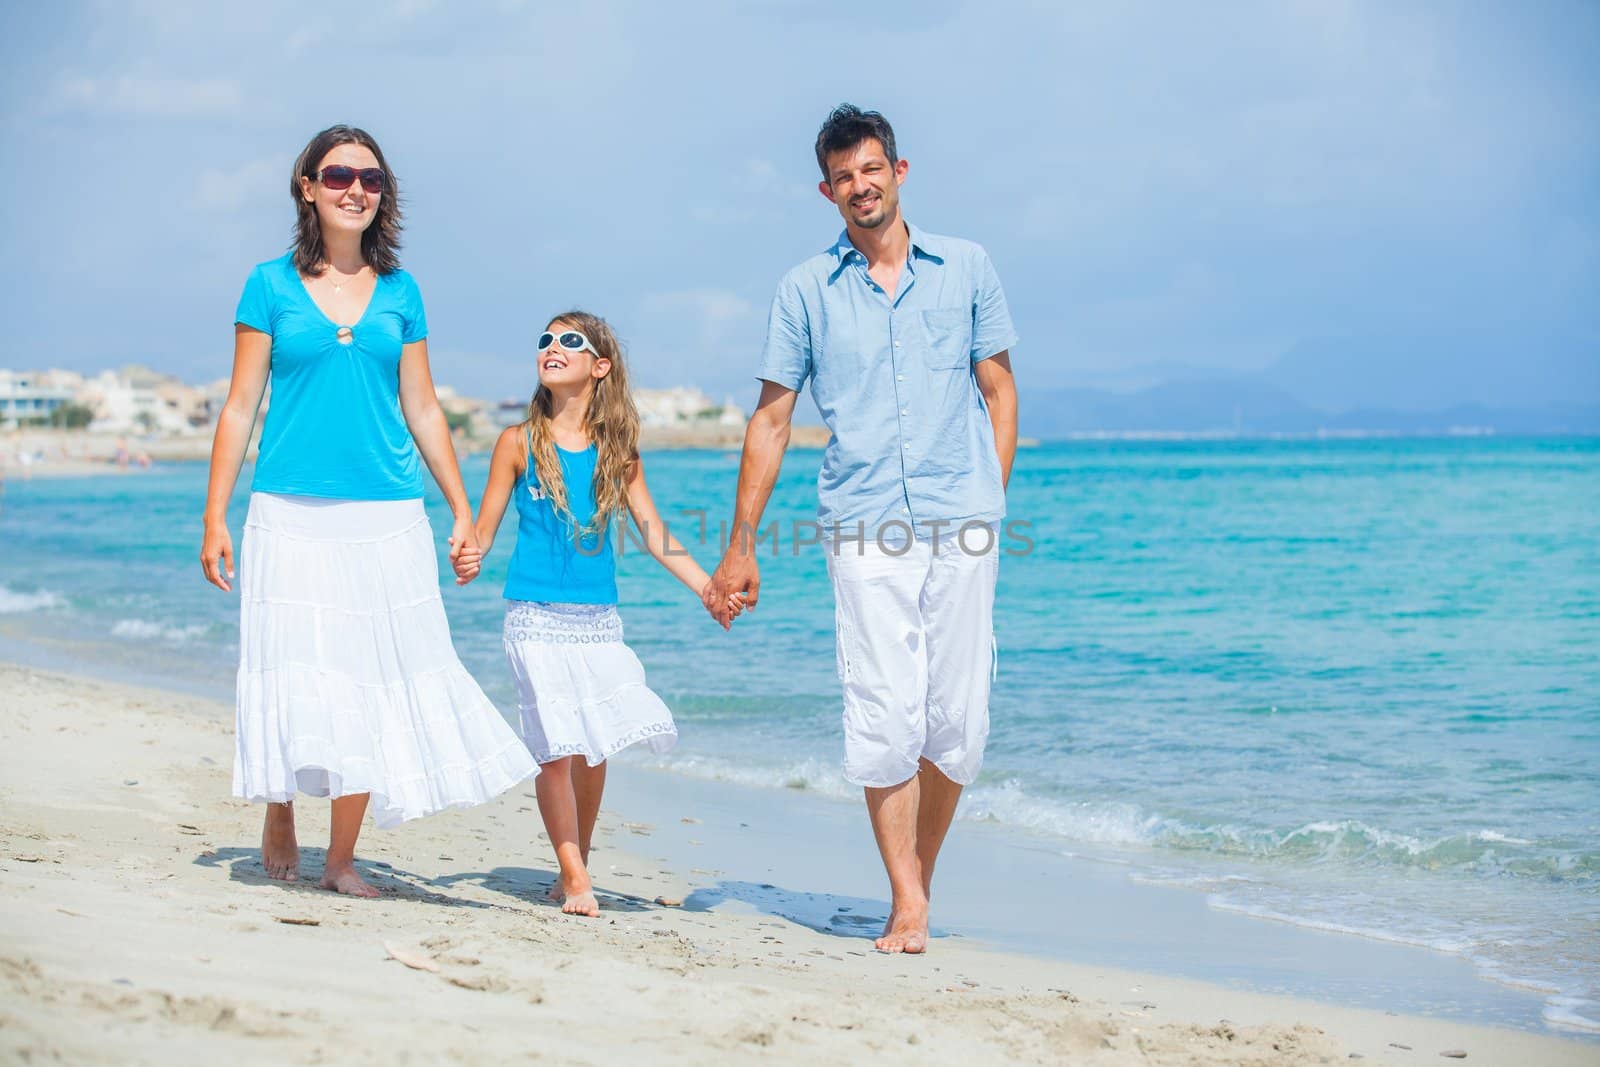 Family having fun on tropical beach by maxoliki